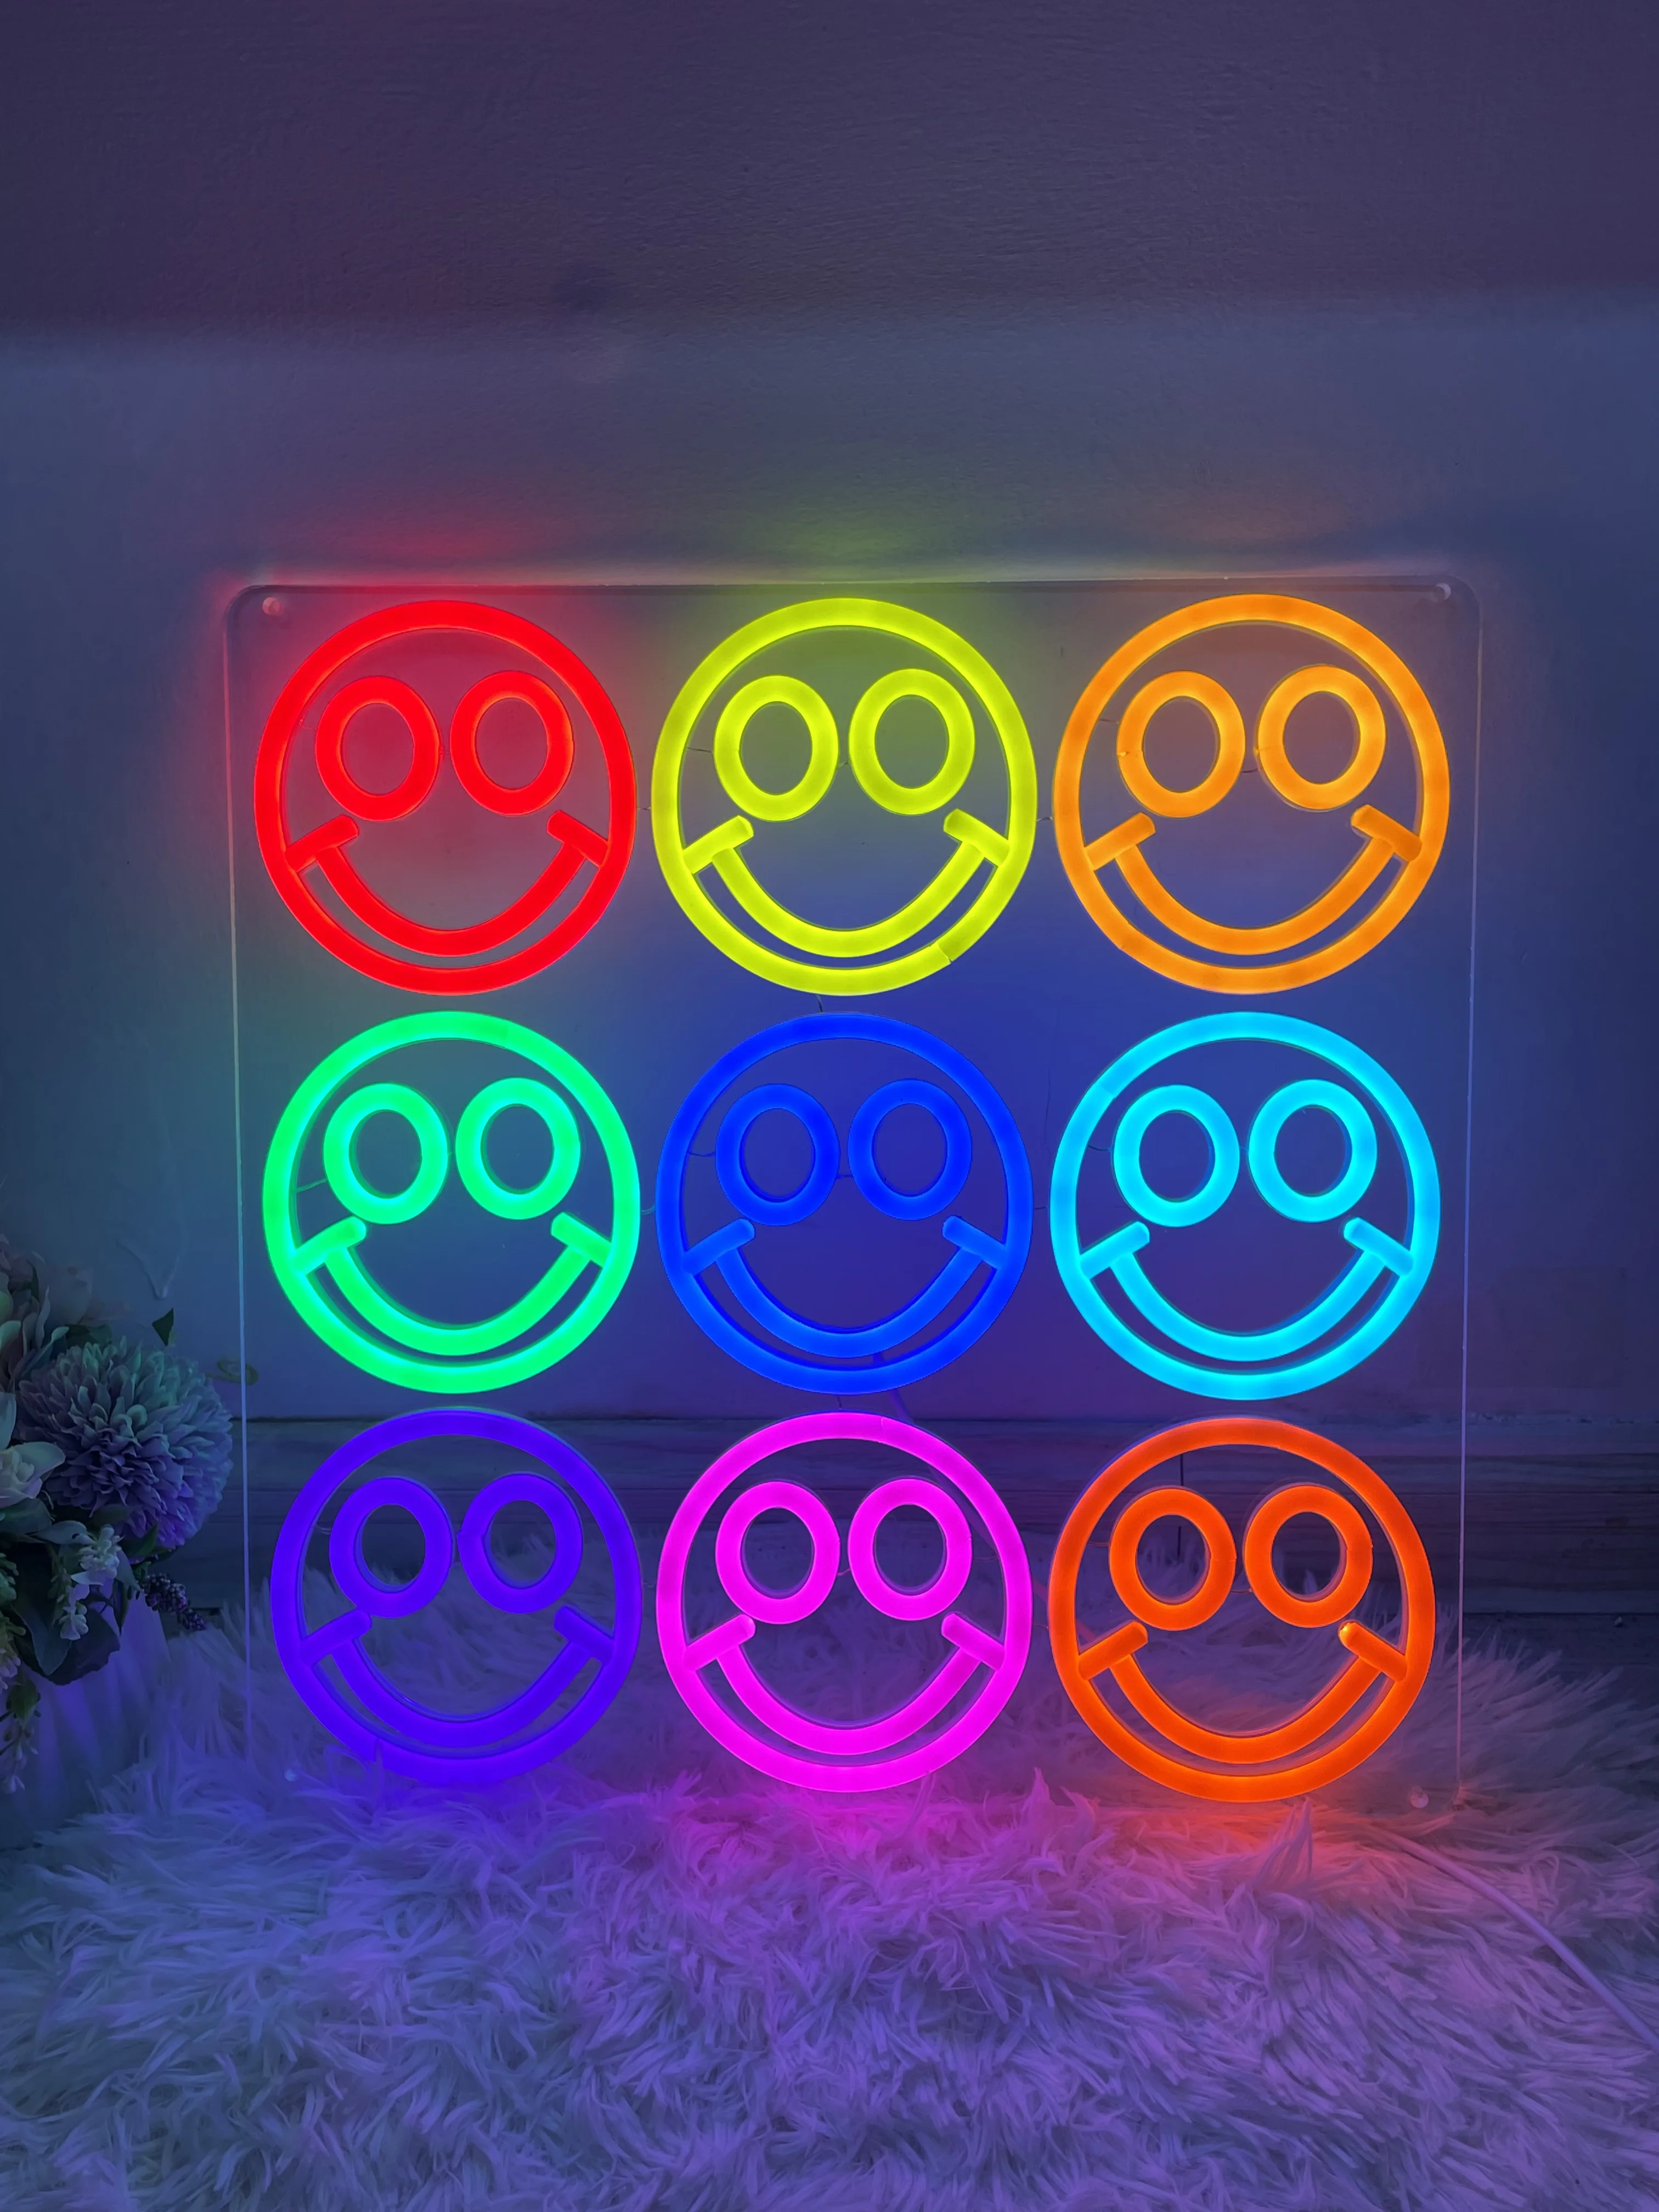 

Custom Smiley Face Neon Sign Smile Face Wall Light for Home Room Bar Club Shop Party Wedding Art Decor